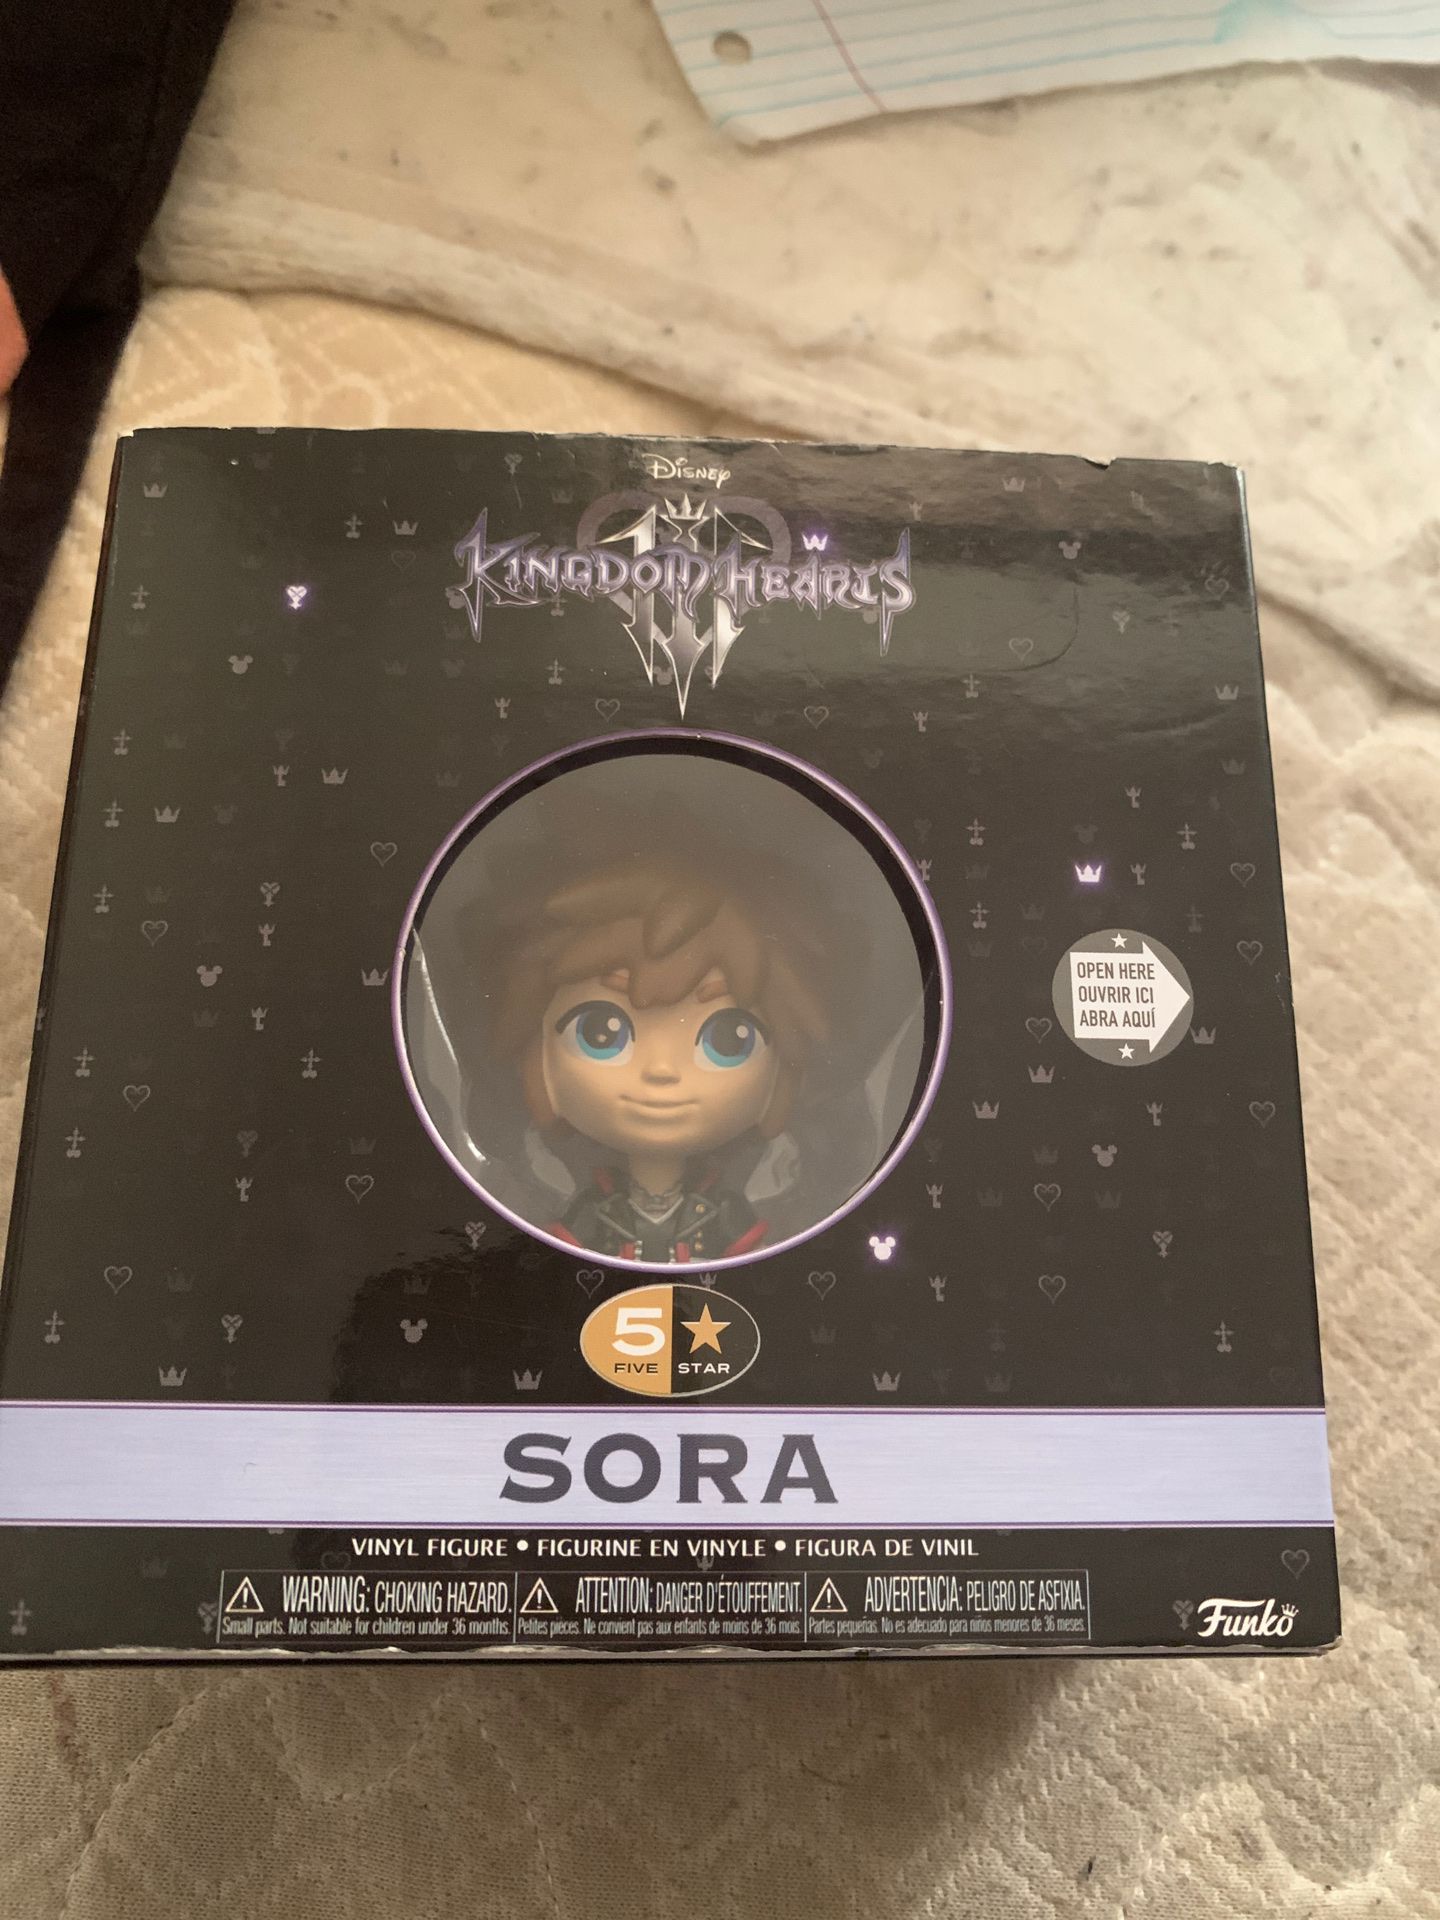 Disney Kingdom Hearts III: Sora Vinyl